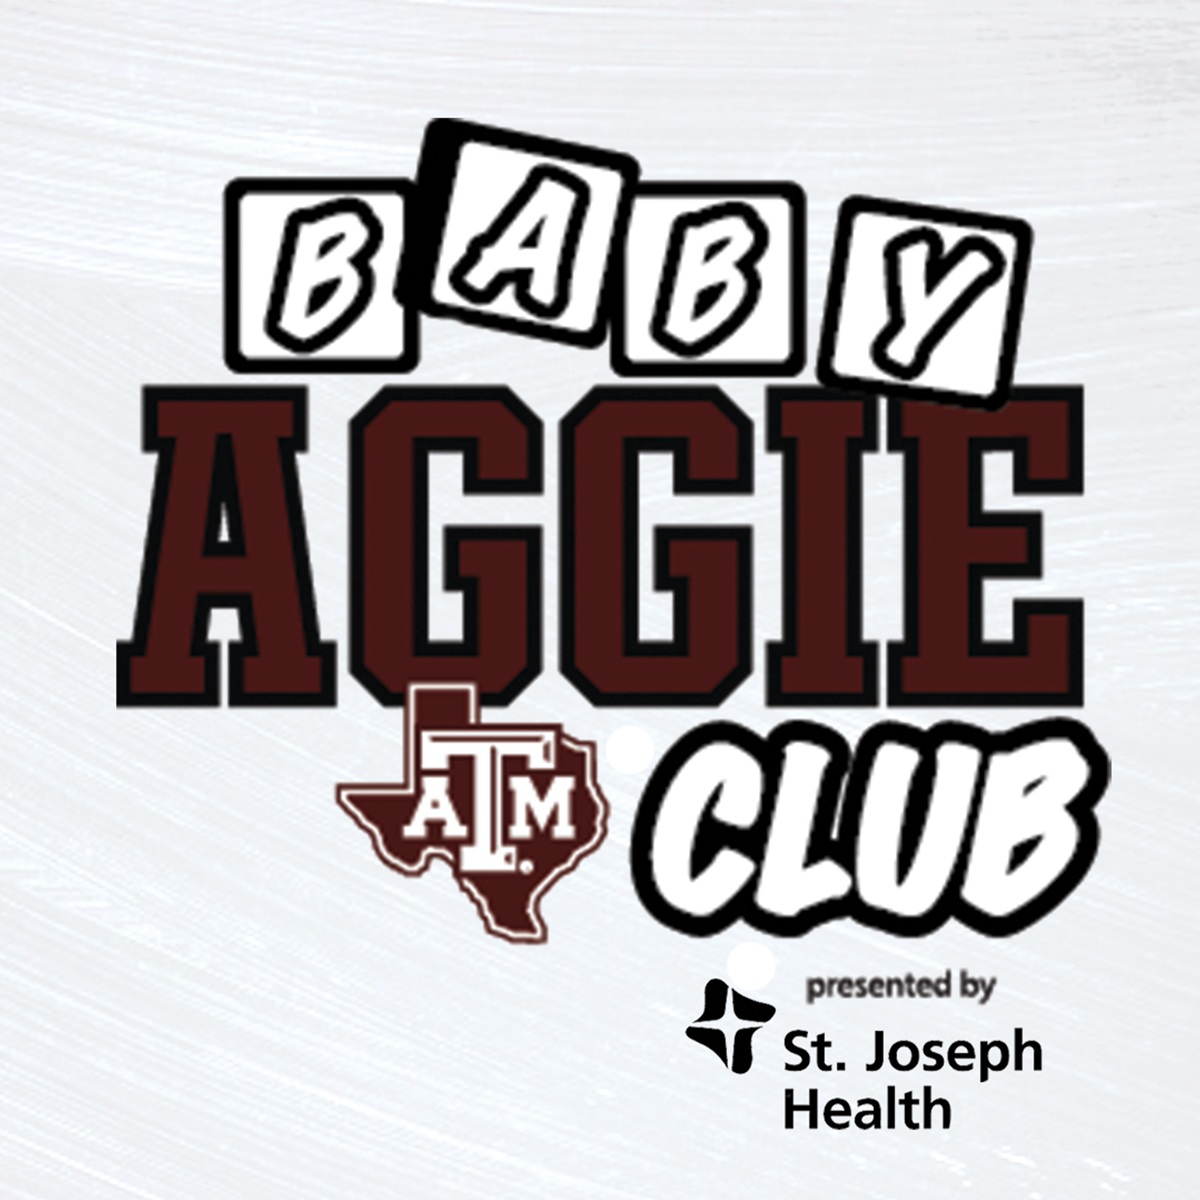 Baby Aggie Club